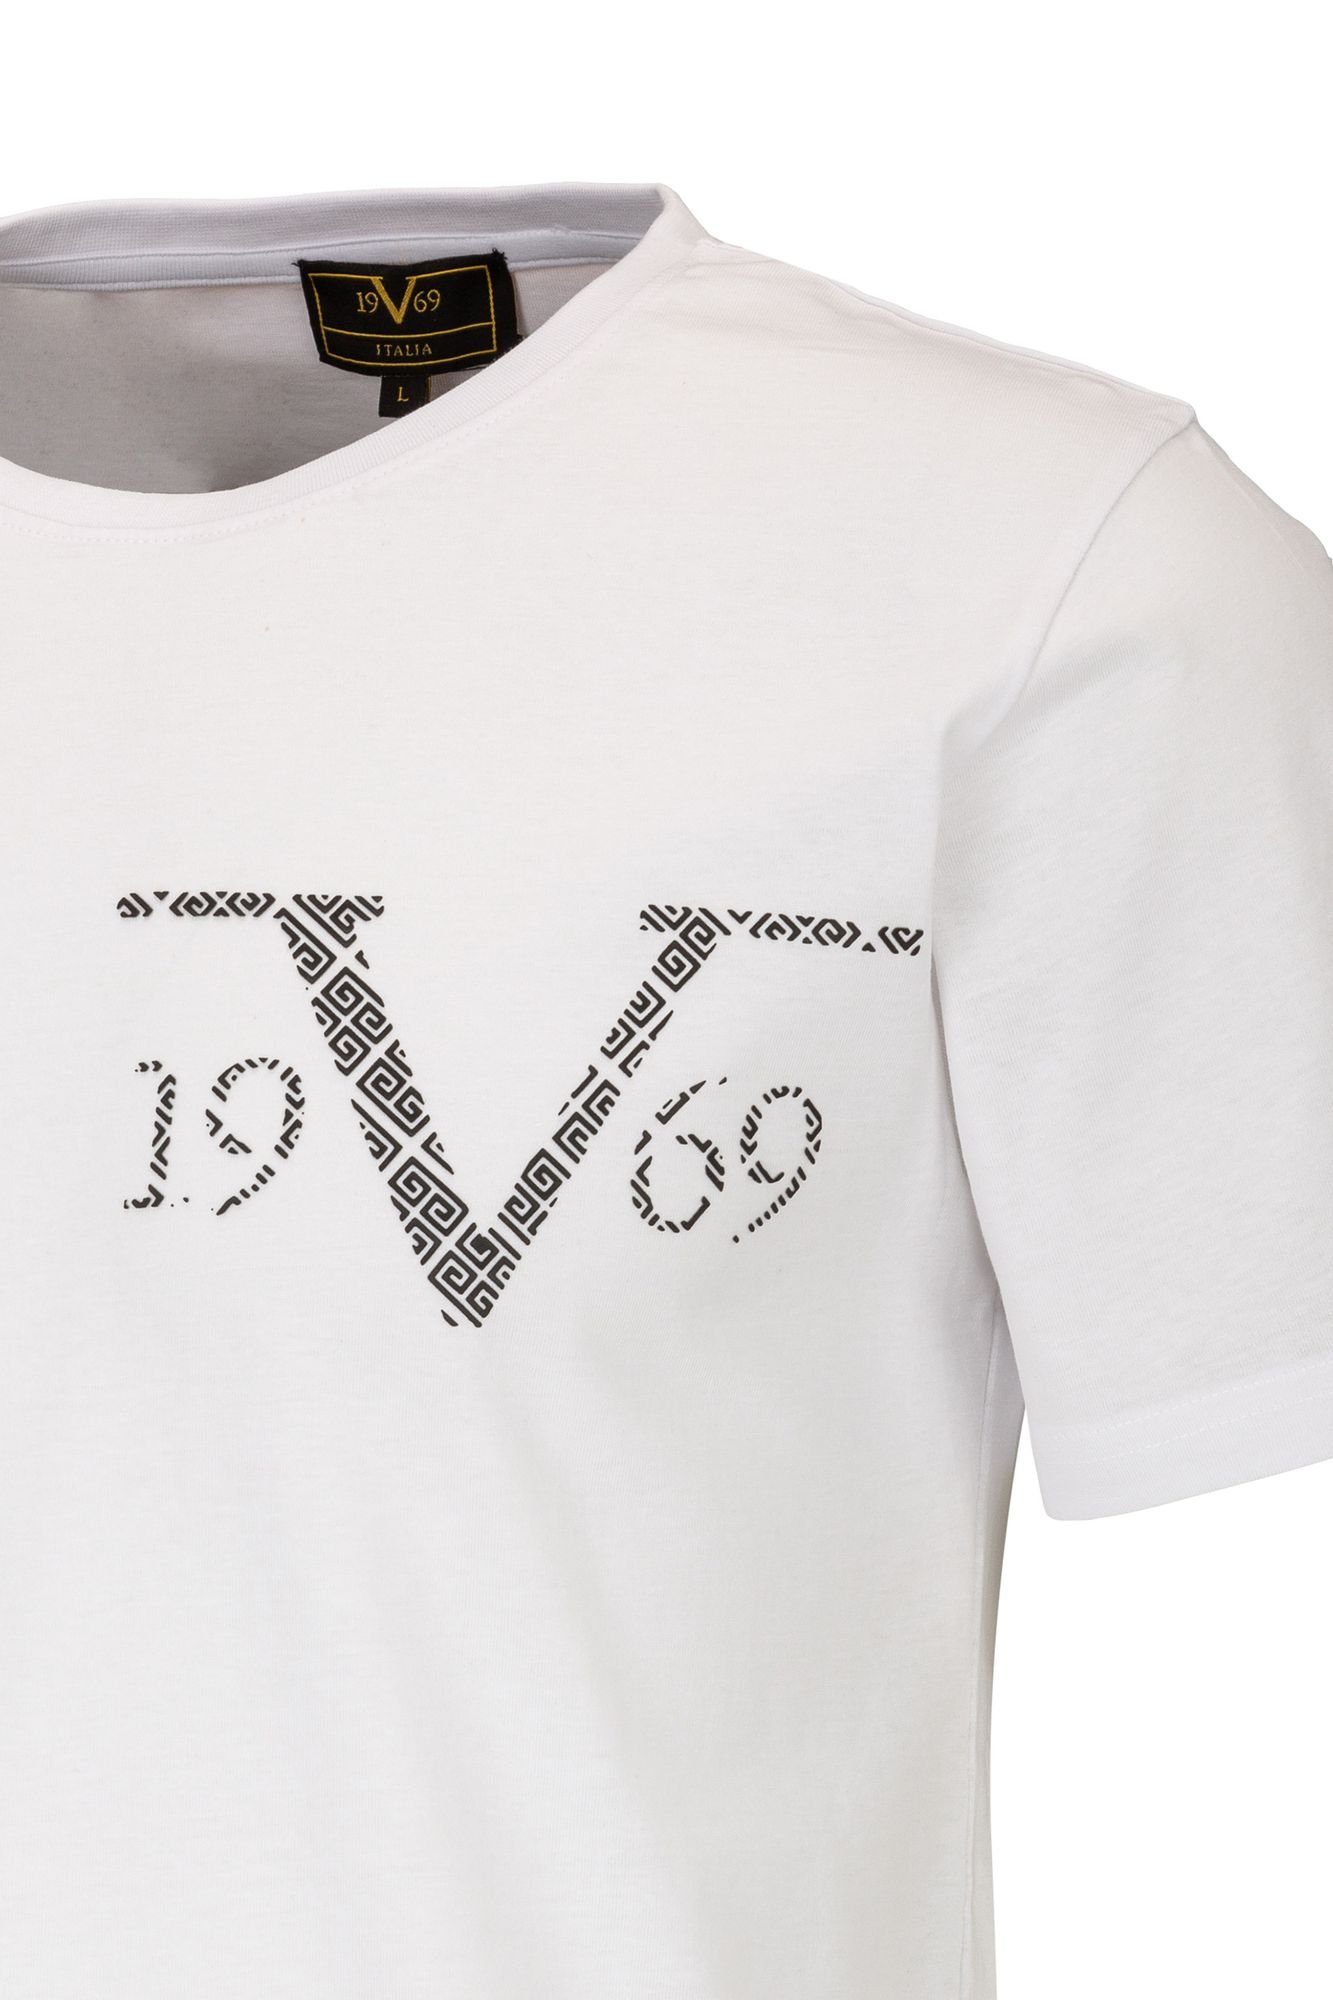 T-Shirt 19V69 Nicolo Versace Italia by